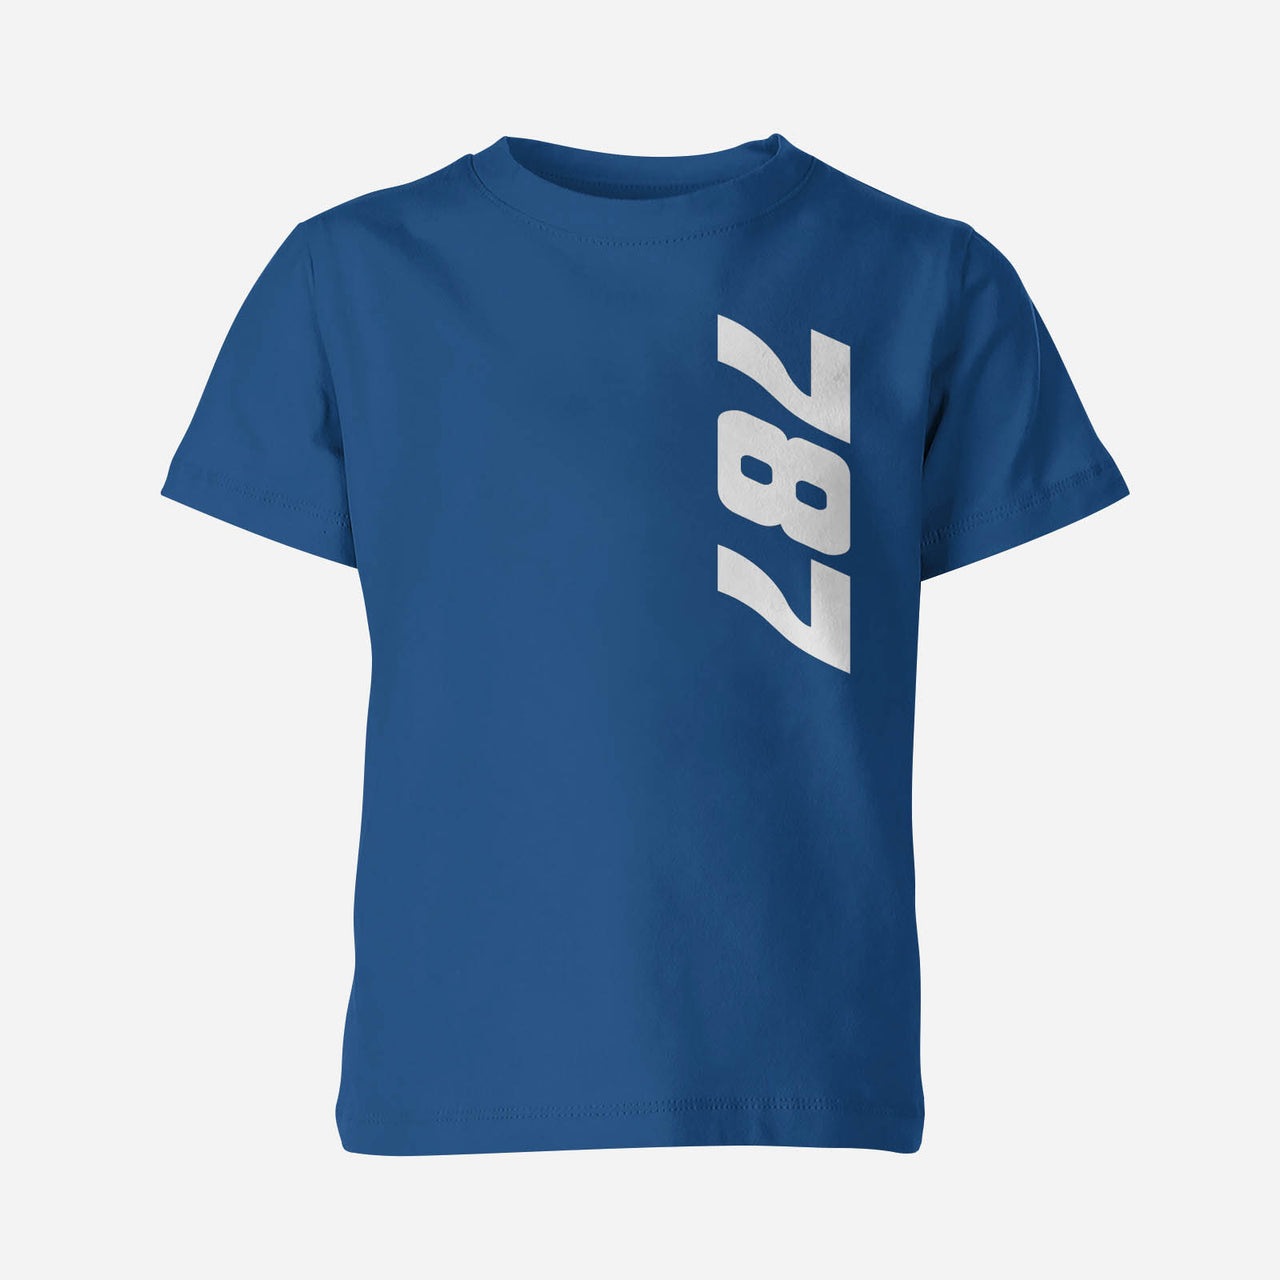 787 Side Text Designed Children T-Shirts